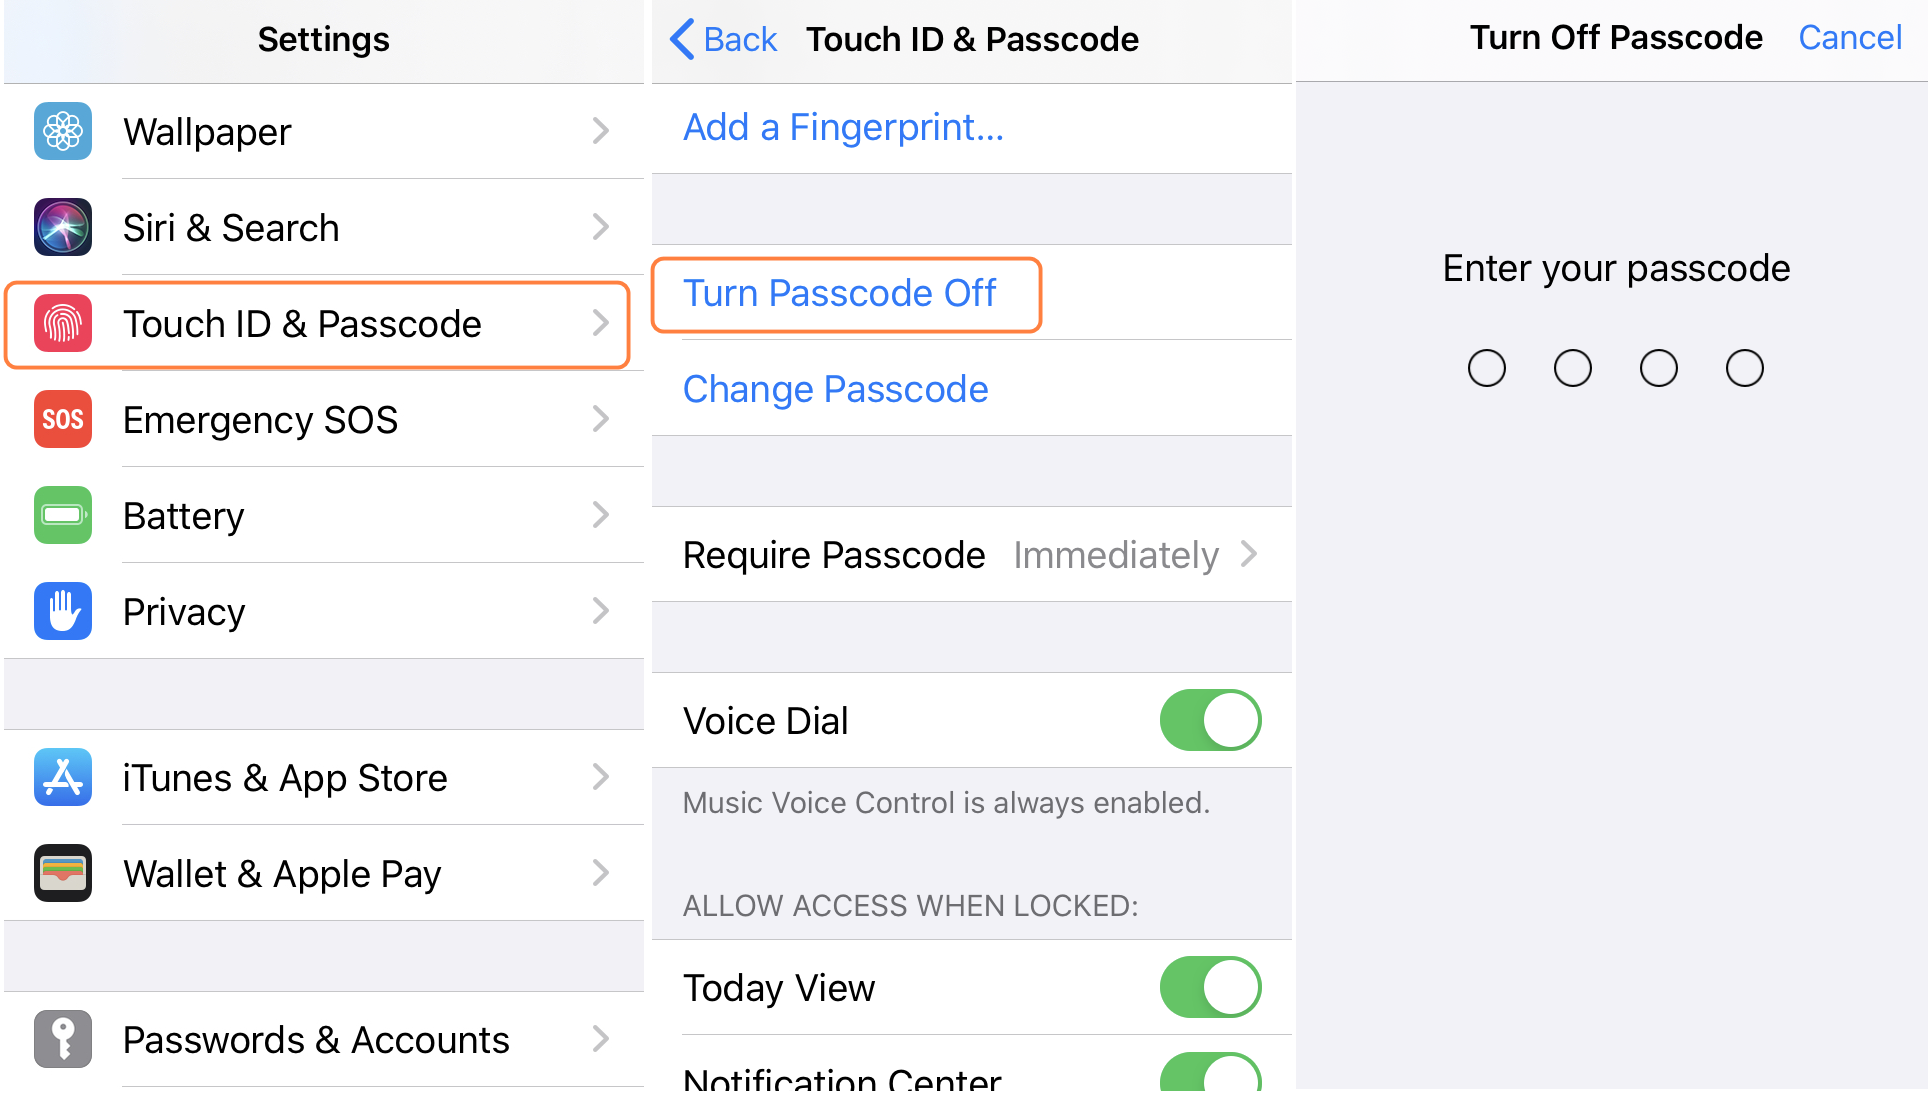 turn off passode on iphone via settings